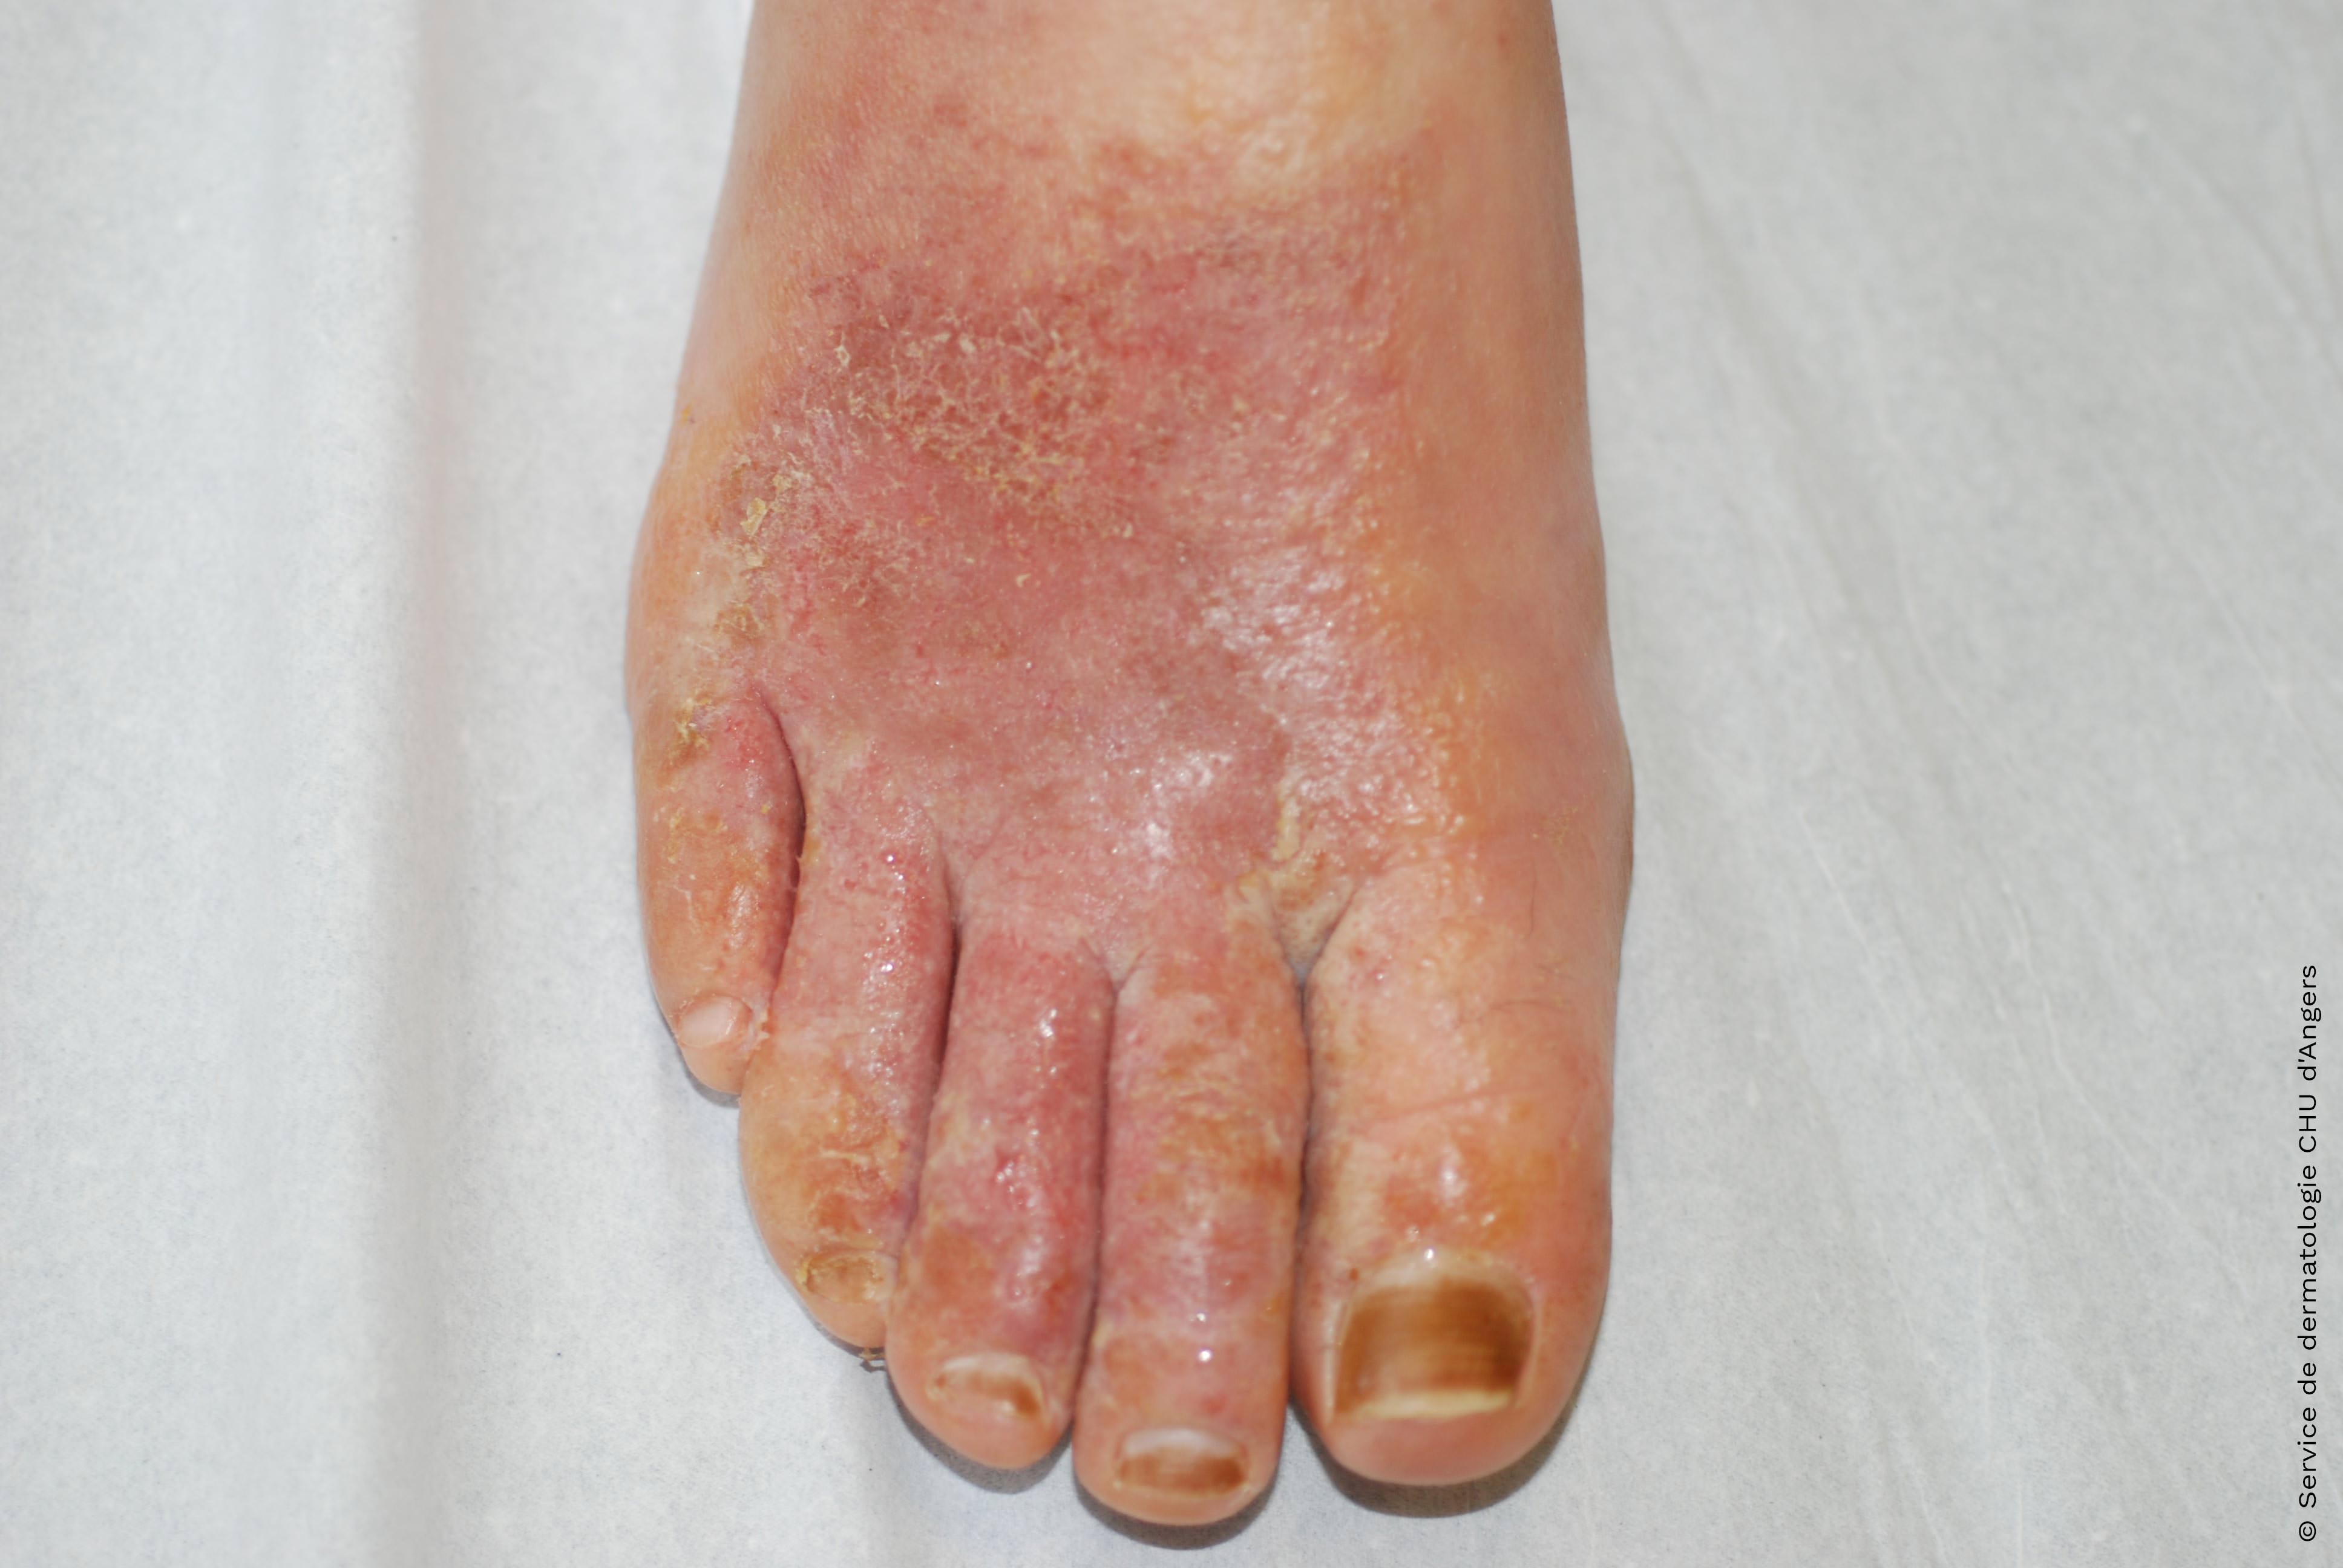 Types Of Eczema On Feet - BEST GAMES WALKTHROUGH